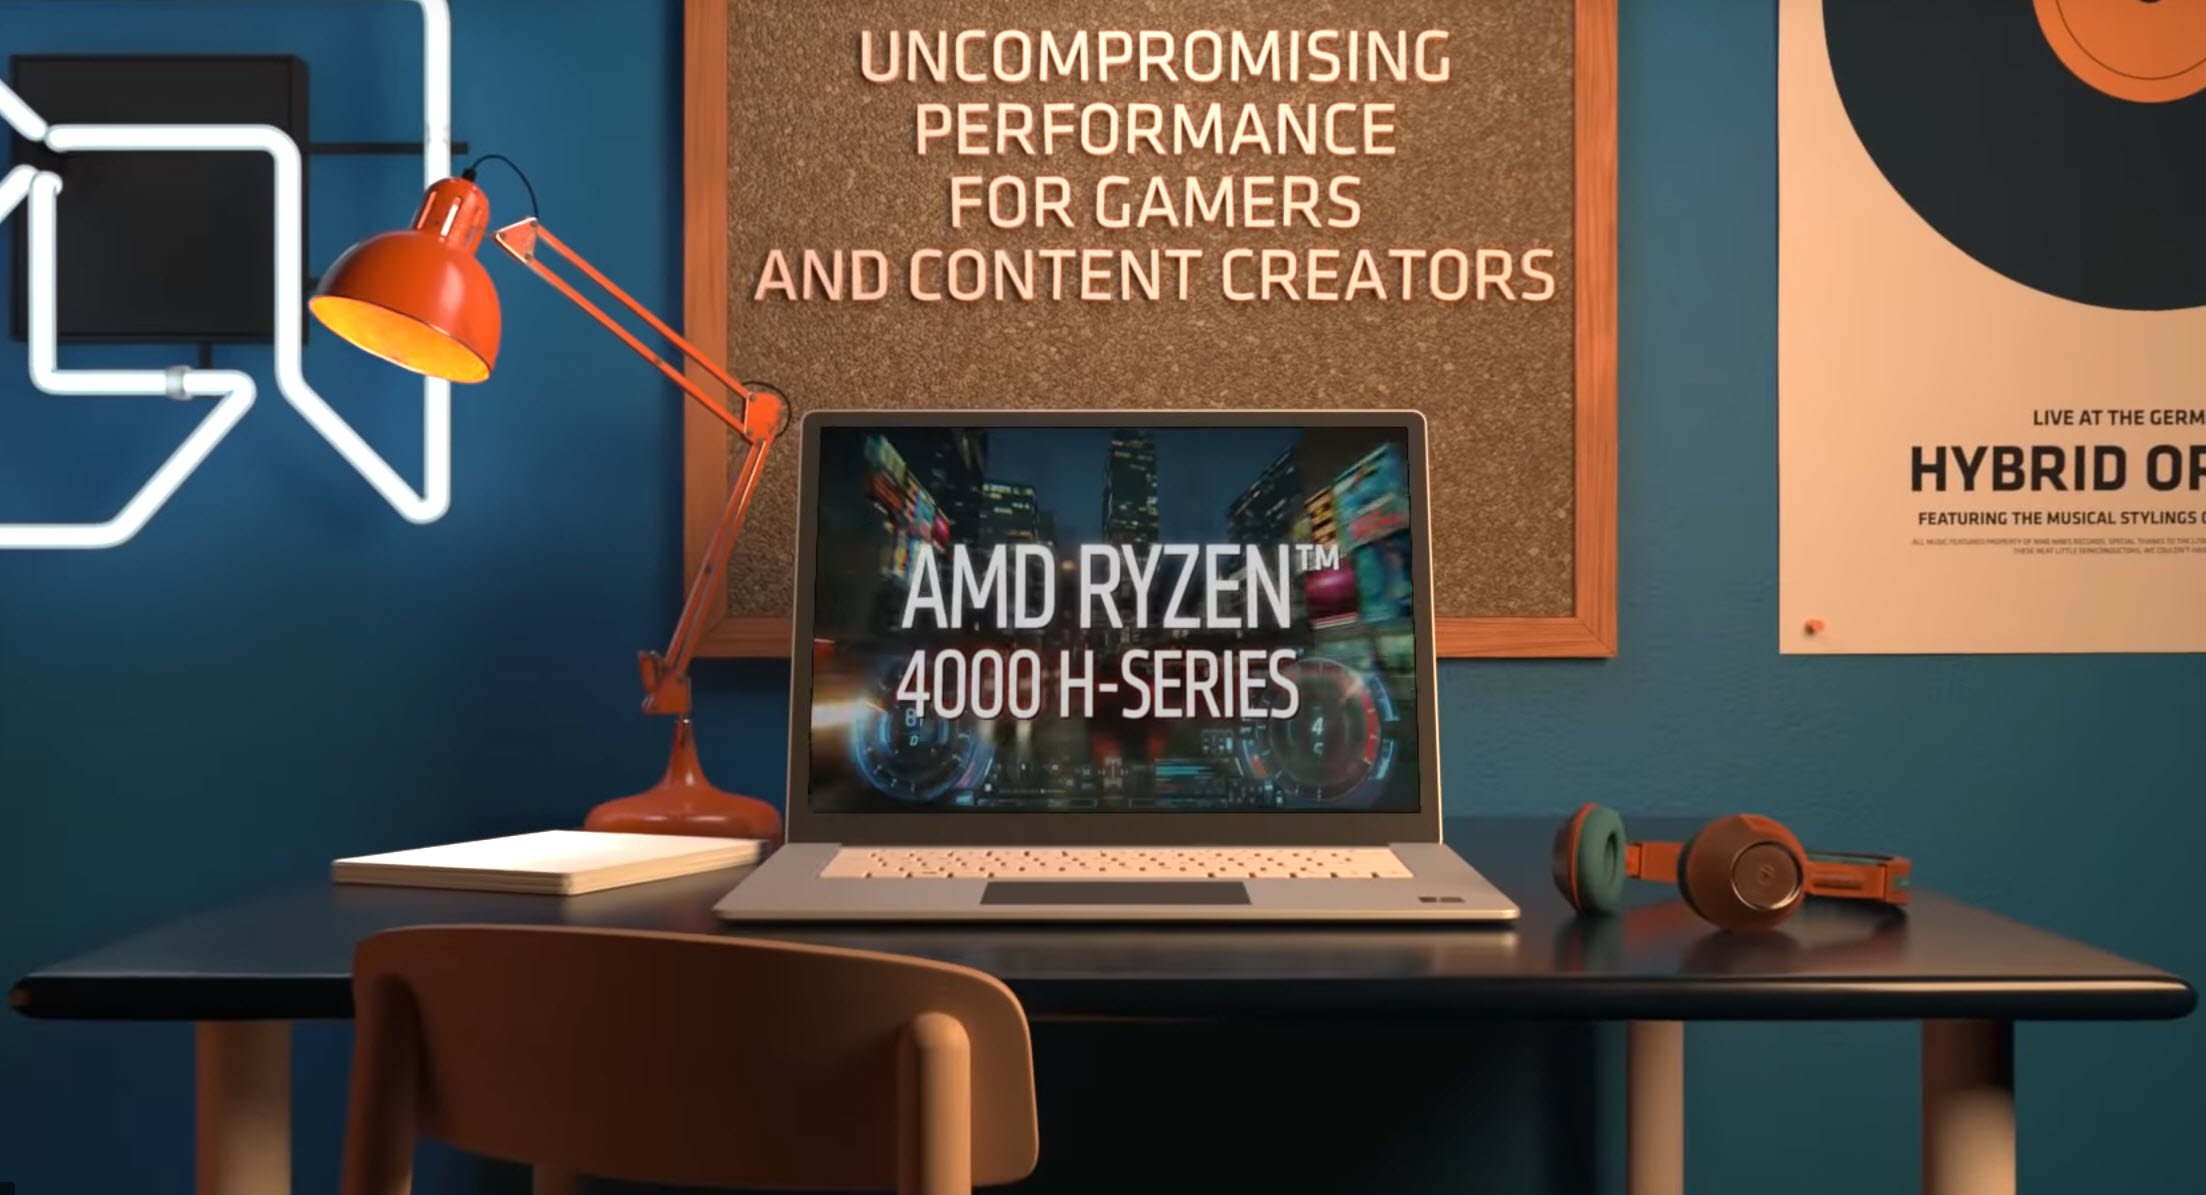 2020 05 09 15 48 37 AMD นำเสนอประสิทธิภาพการประมวลผล และความยืดหยุ่นในการทำงานที่ยอดเยี่ยมด้วย AMD Ryzen PRO 4000 Series Mobile Processor